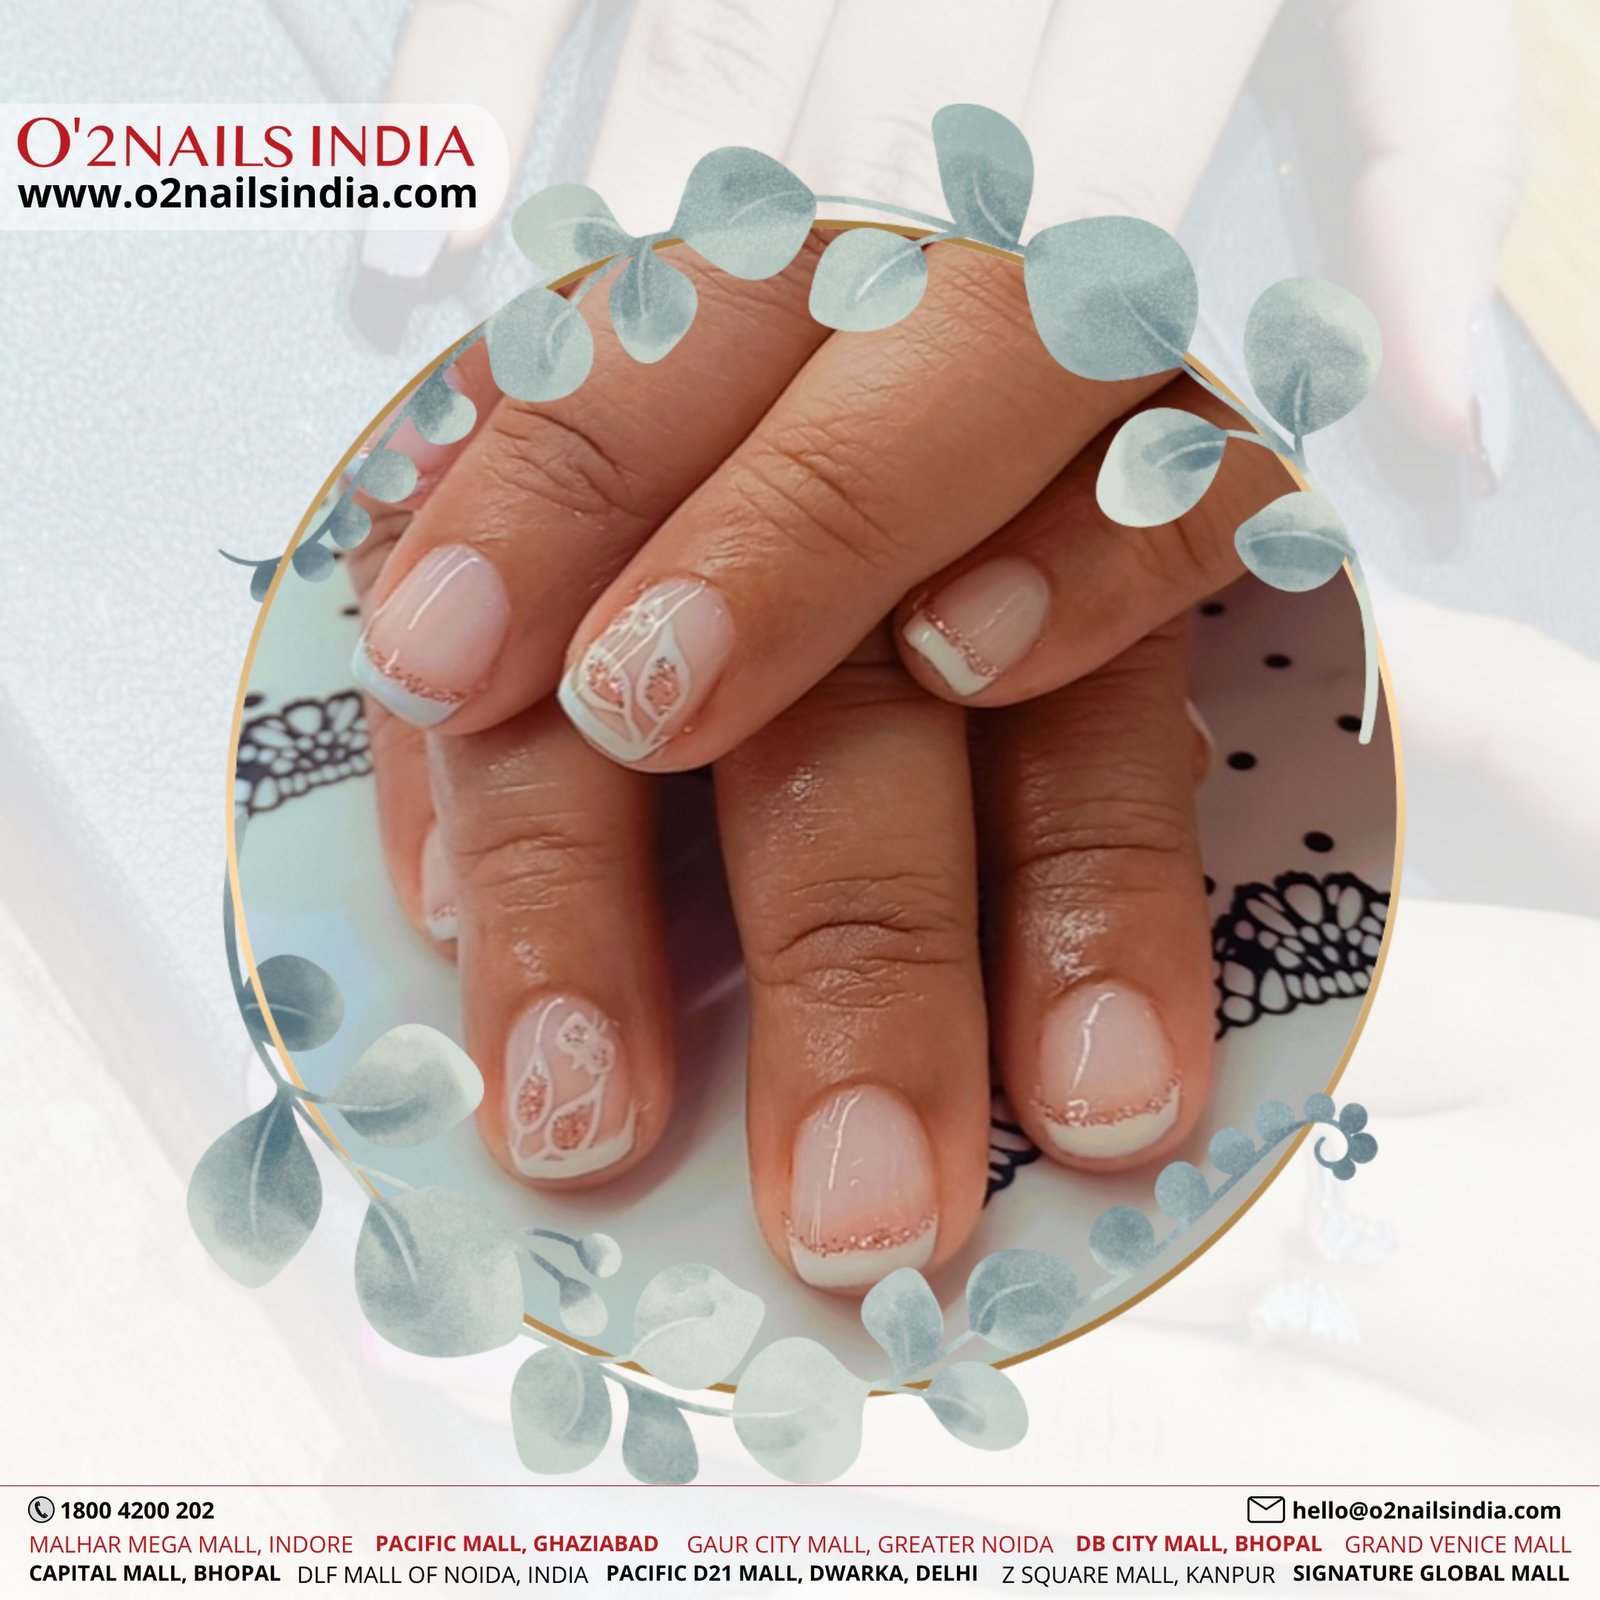 Acrylic Nails in Delhi, एक्रिलिक नेल, दिल्ली, Delhi | Acrylic Nails Price  in Delhi